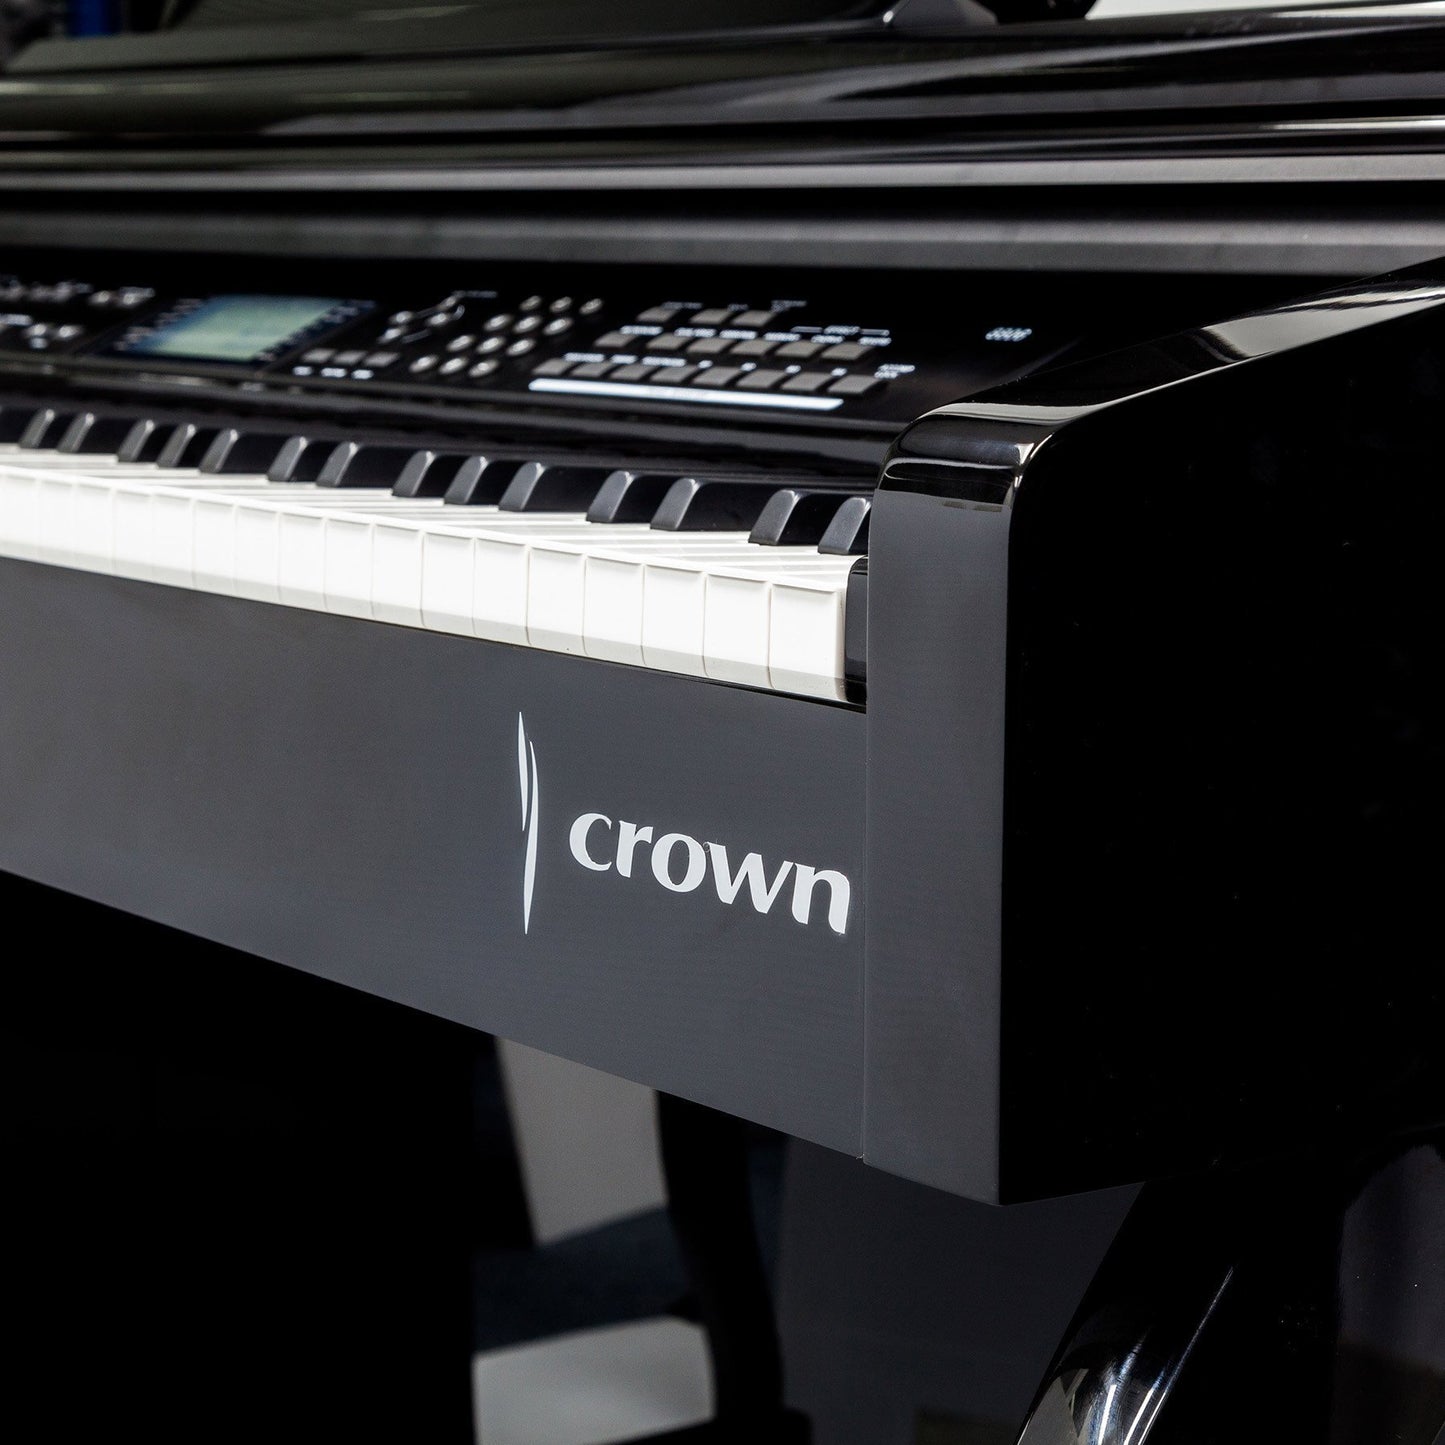 Crown 88-Key Hammer-Action Ebony Lacquer Digital Piano (Black Gloss)